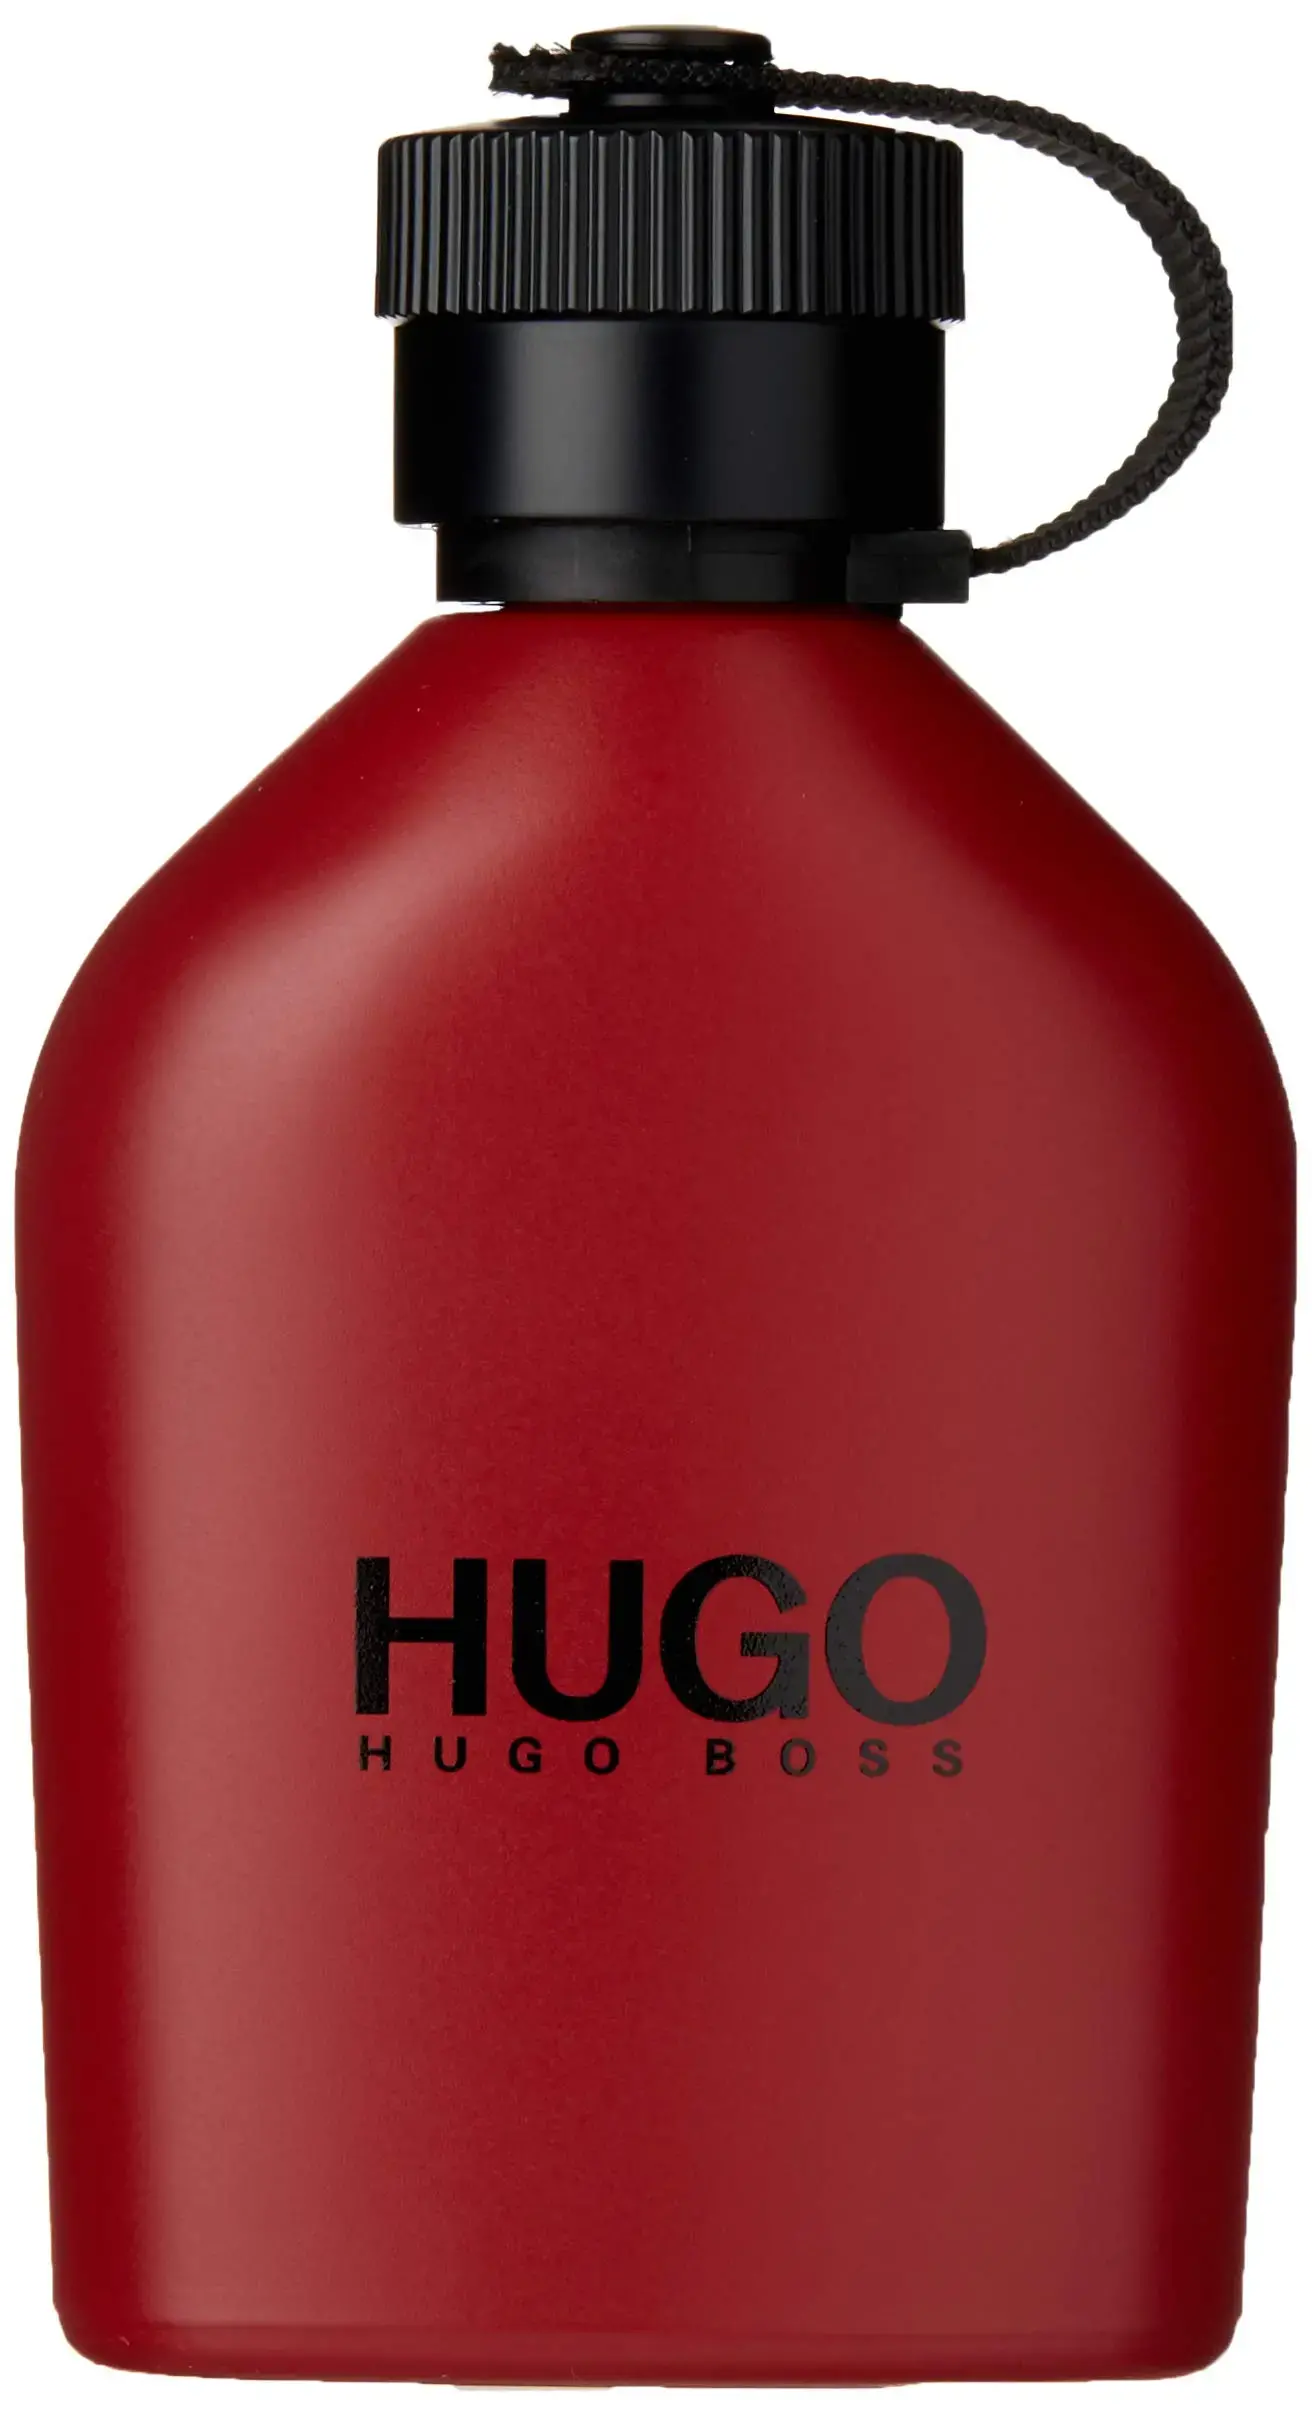 Хьюго босс ред. Hugo Boss Red Eau de Toilette. Hugo Boss "Hugo Red" EDT, 100ml. Hugo Boss man 125 ml. Hugo Boss Hugo Red men.